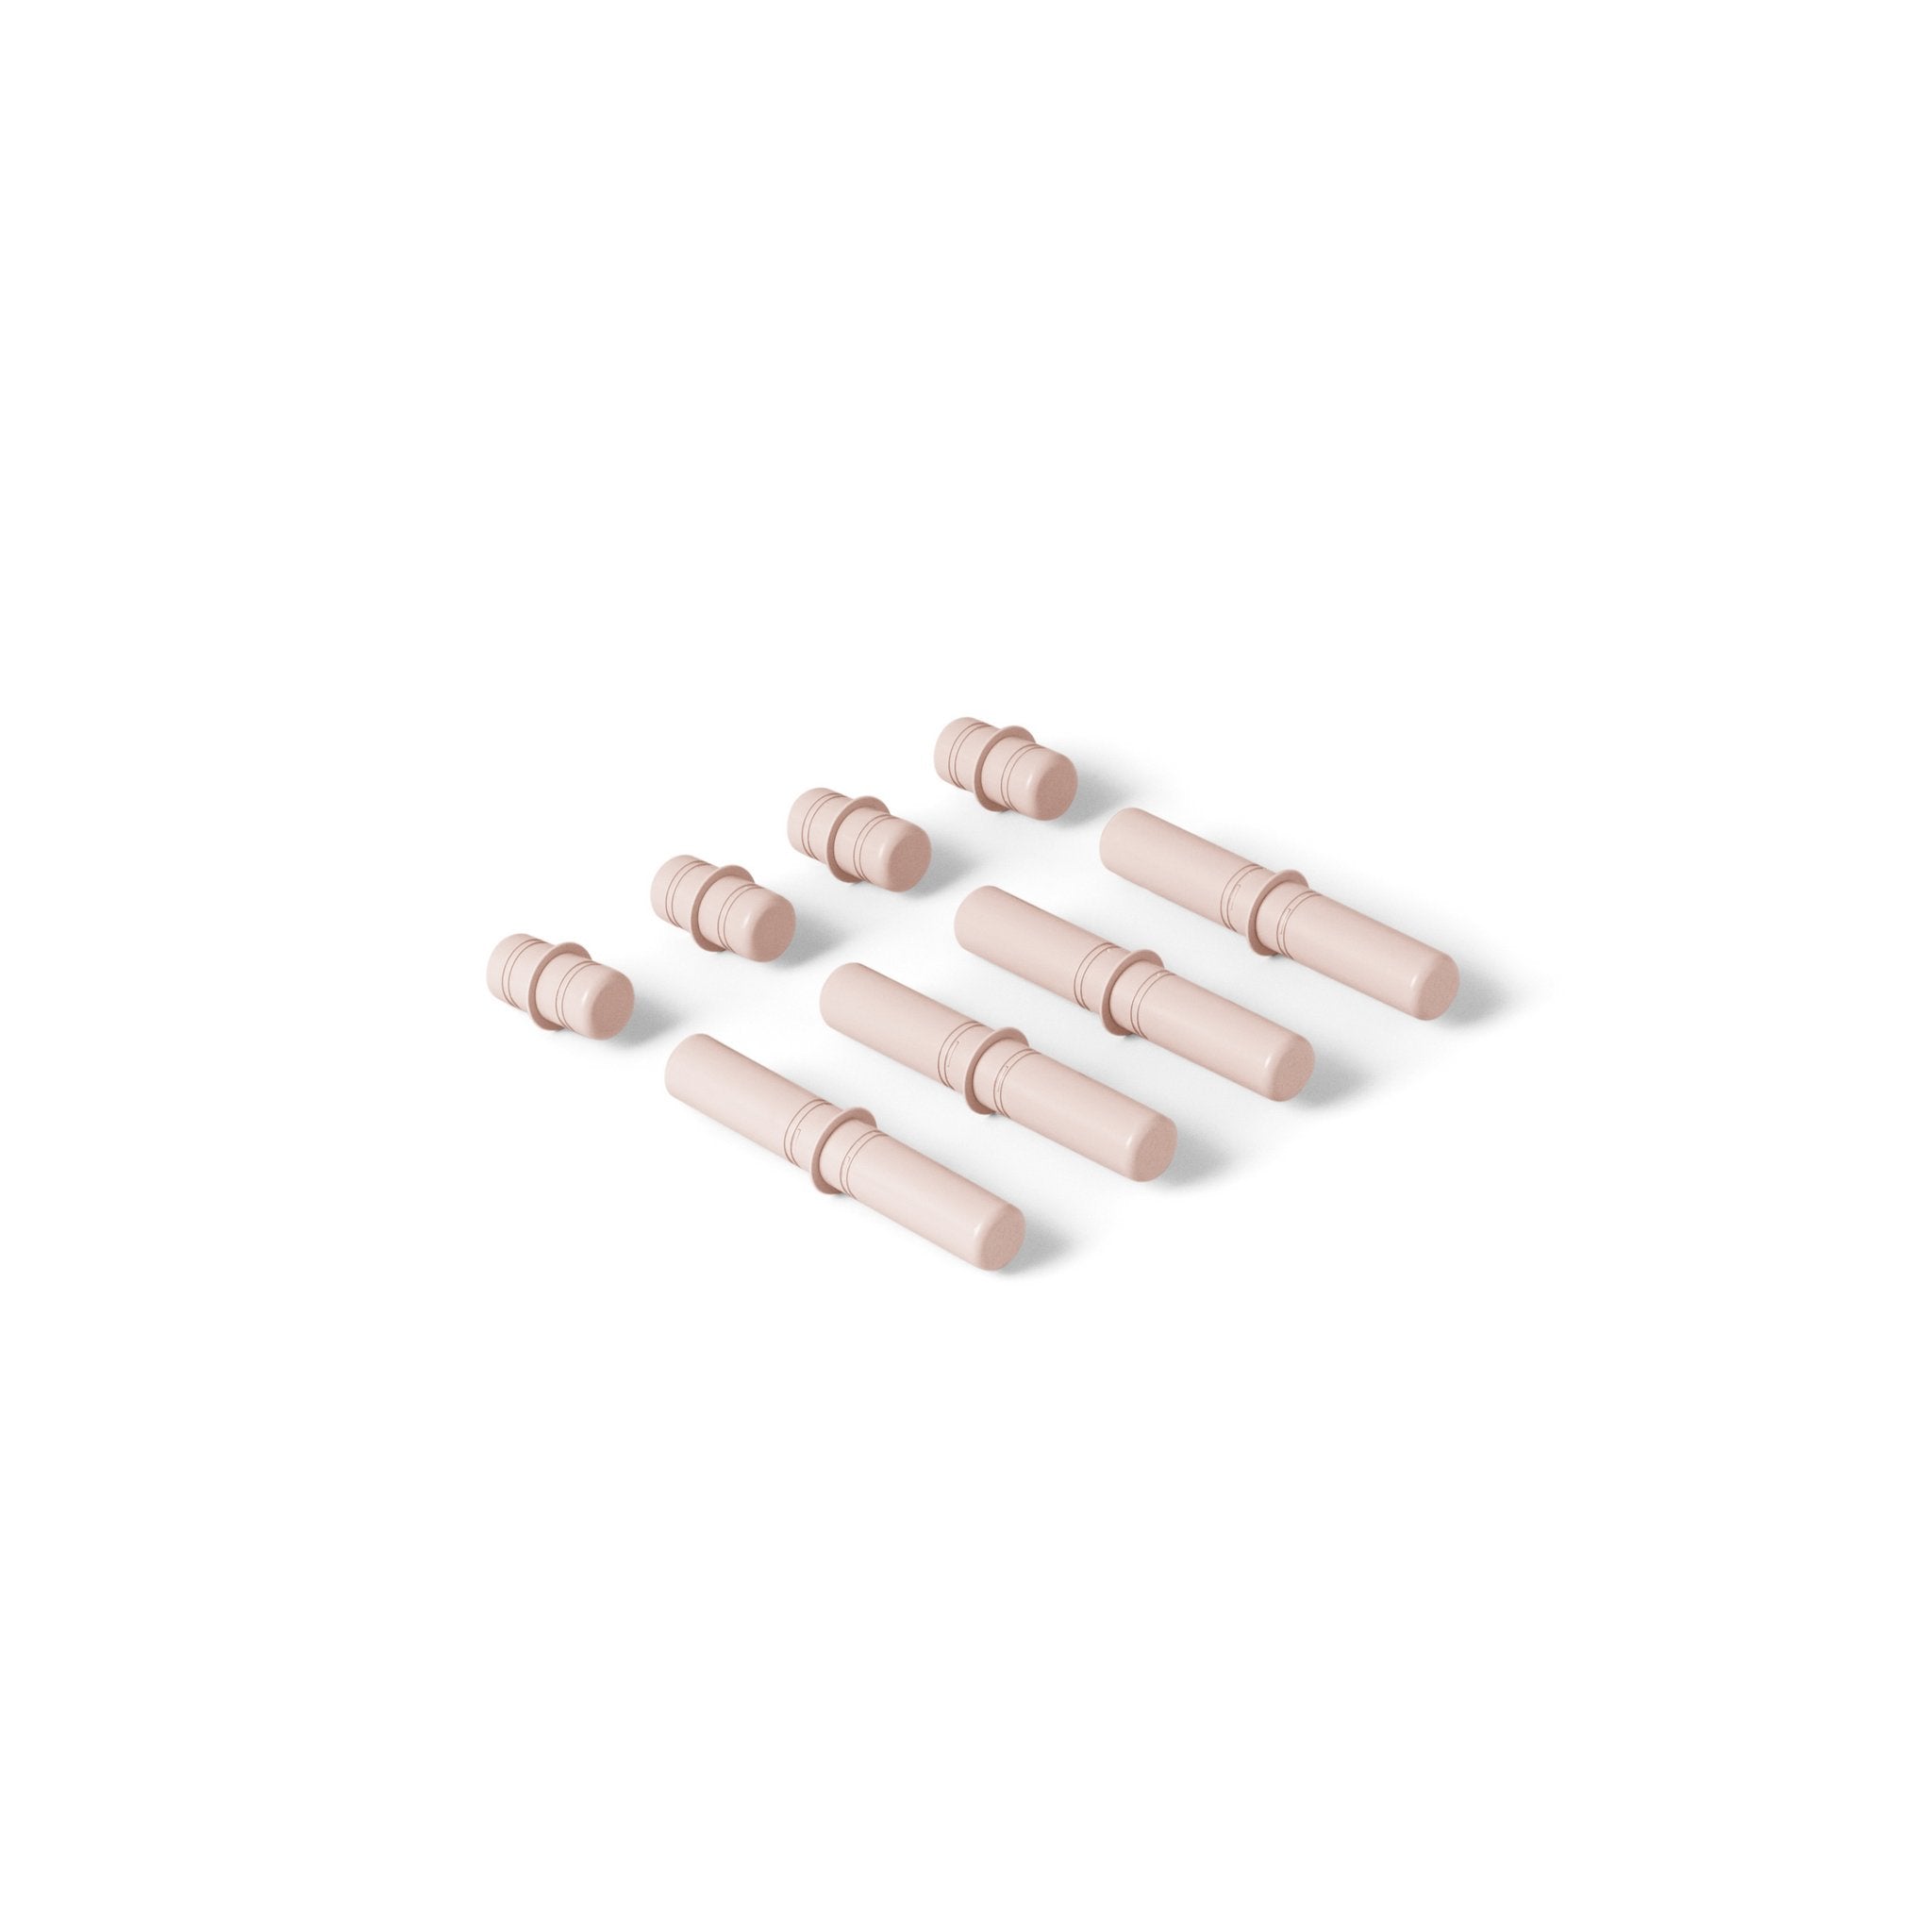 Module - 8 pins, pink/soft rose